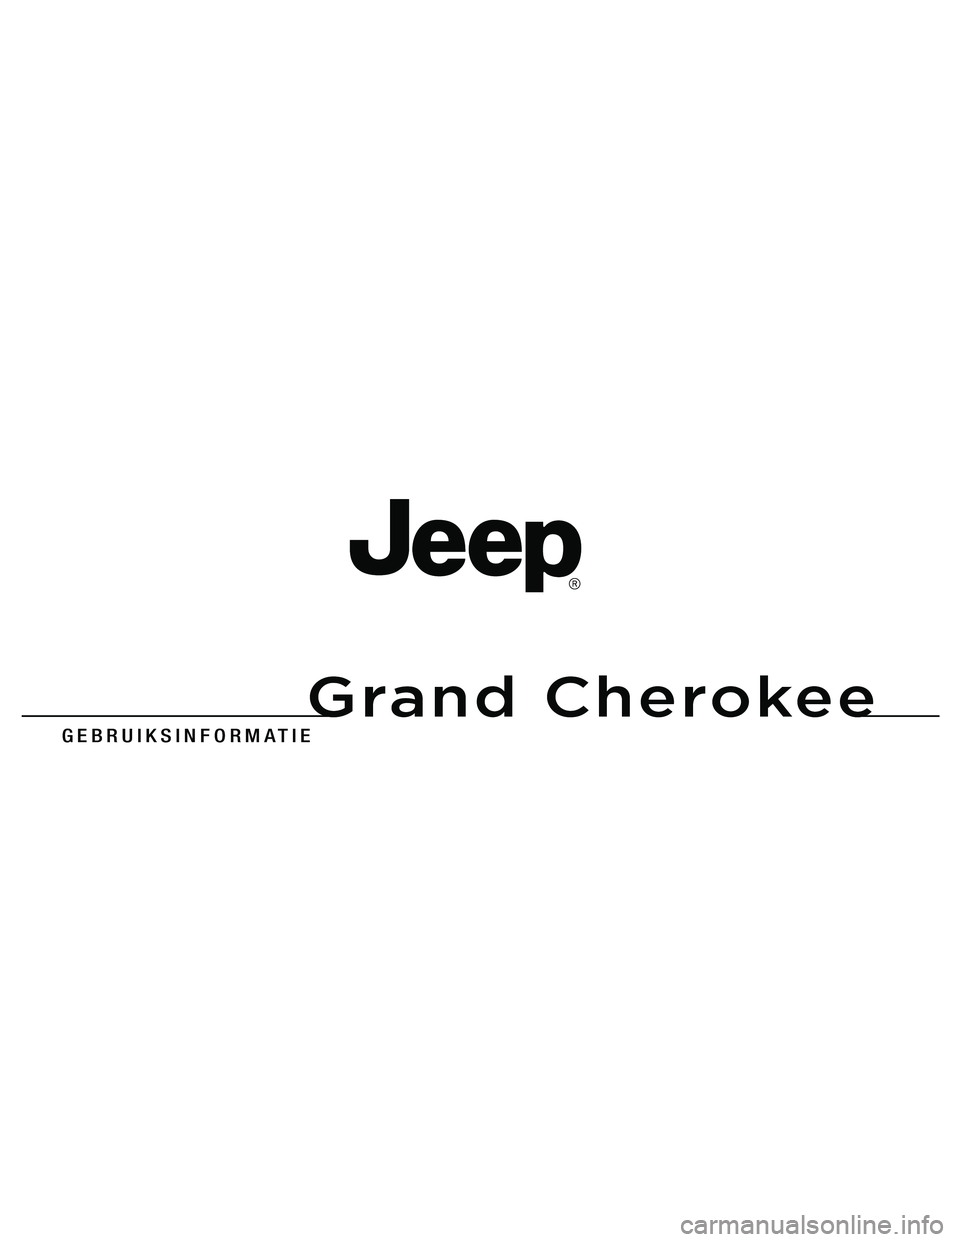 JEEP GRAND CHEROKEE 2015  Instructieboek (in Dutch) 
Grand Cherokee
G E B R U I K S I N \f O R M A \b I E
G r a n d   C h e r o k e e
11WK741-126-DUT-AA
                  \k        Gedruk\f in E\kur\bpa 11 